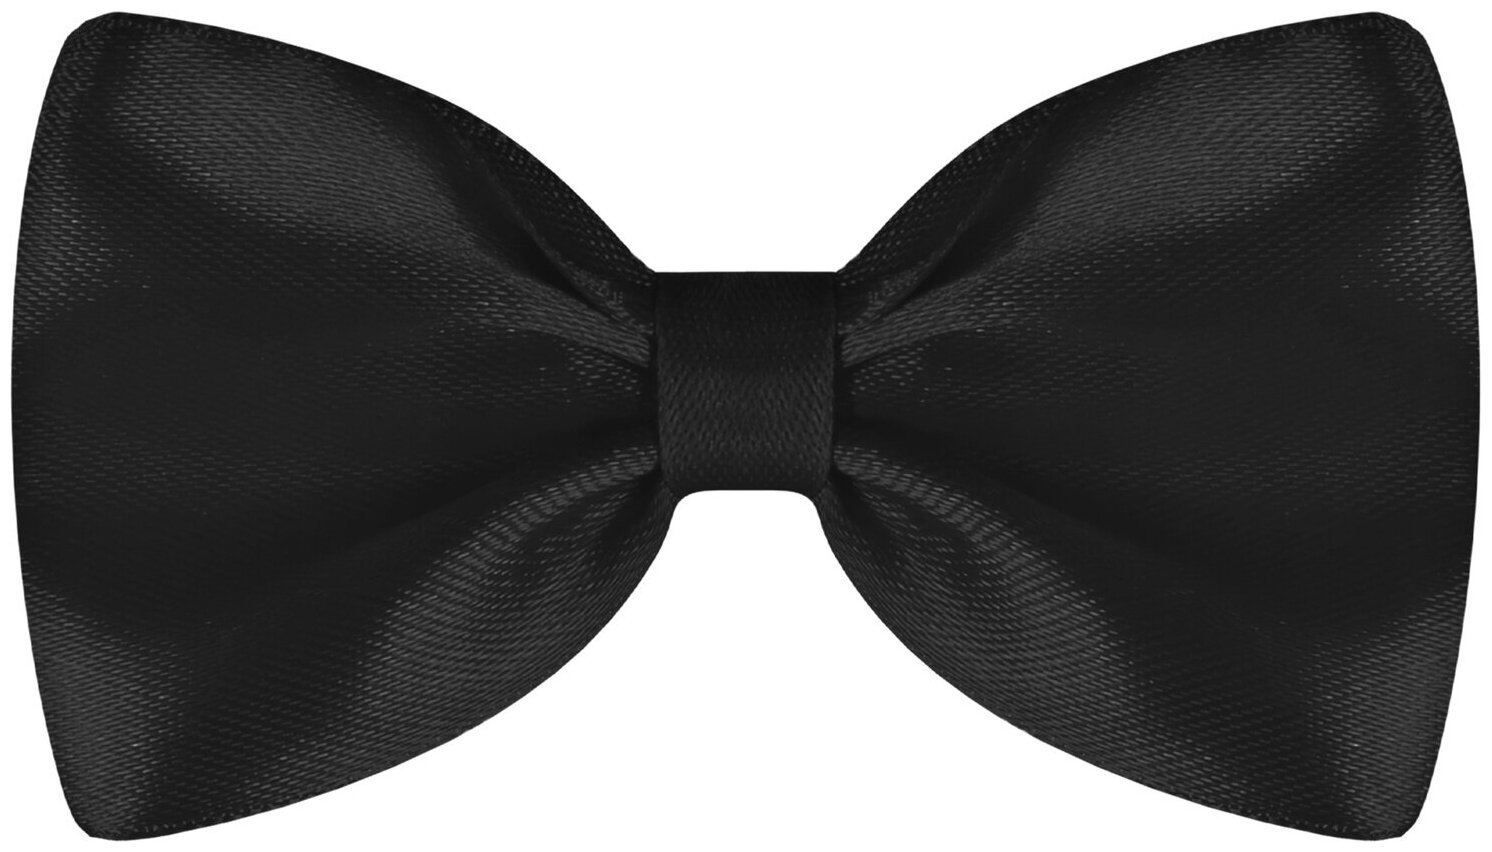 Tappi одежда Бабочка Бэта, черная, размер S-M, ош 26см-46см бч11S-M, 0,1 кг